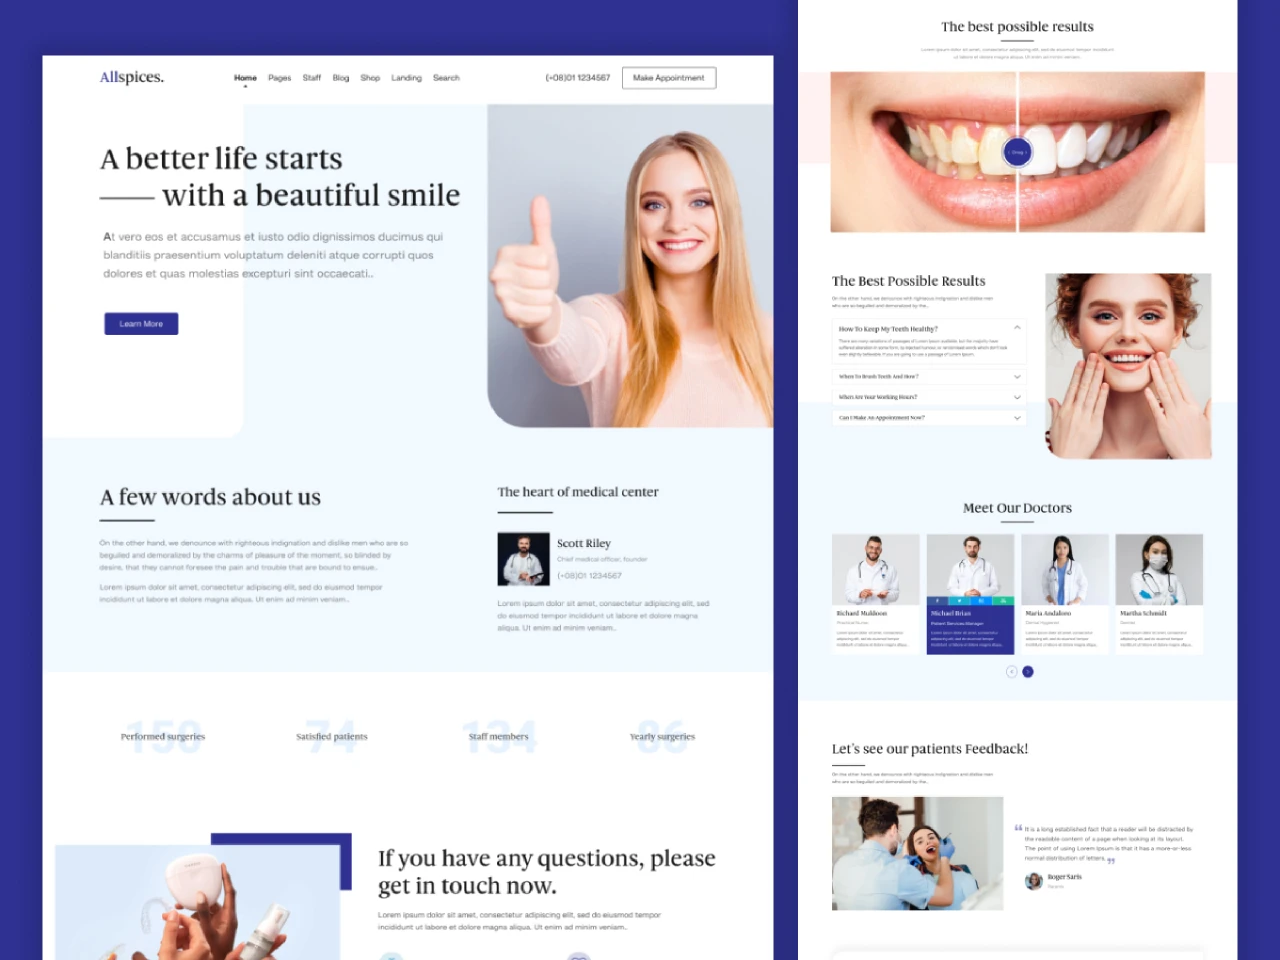 Allspices - Dental Care Website Design for Figma and Adobe XD